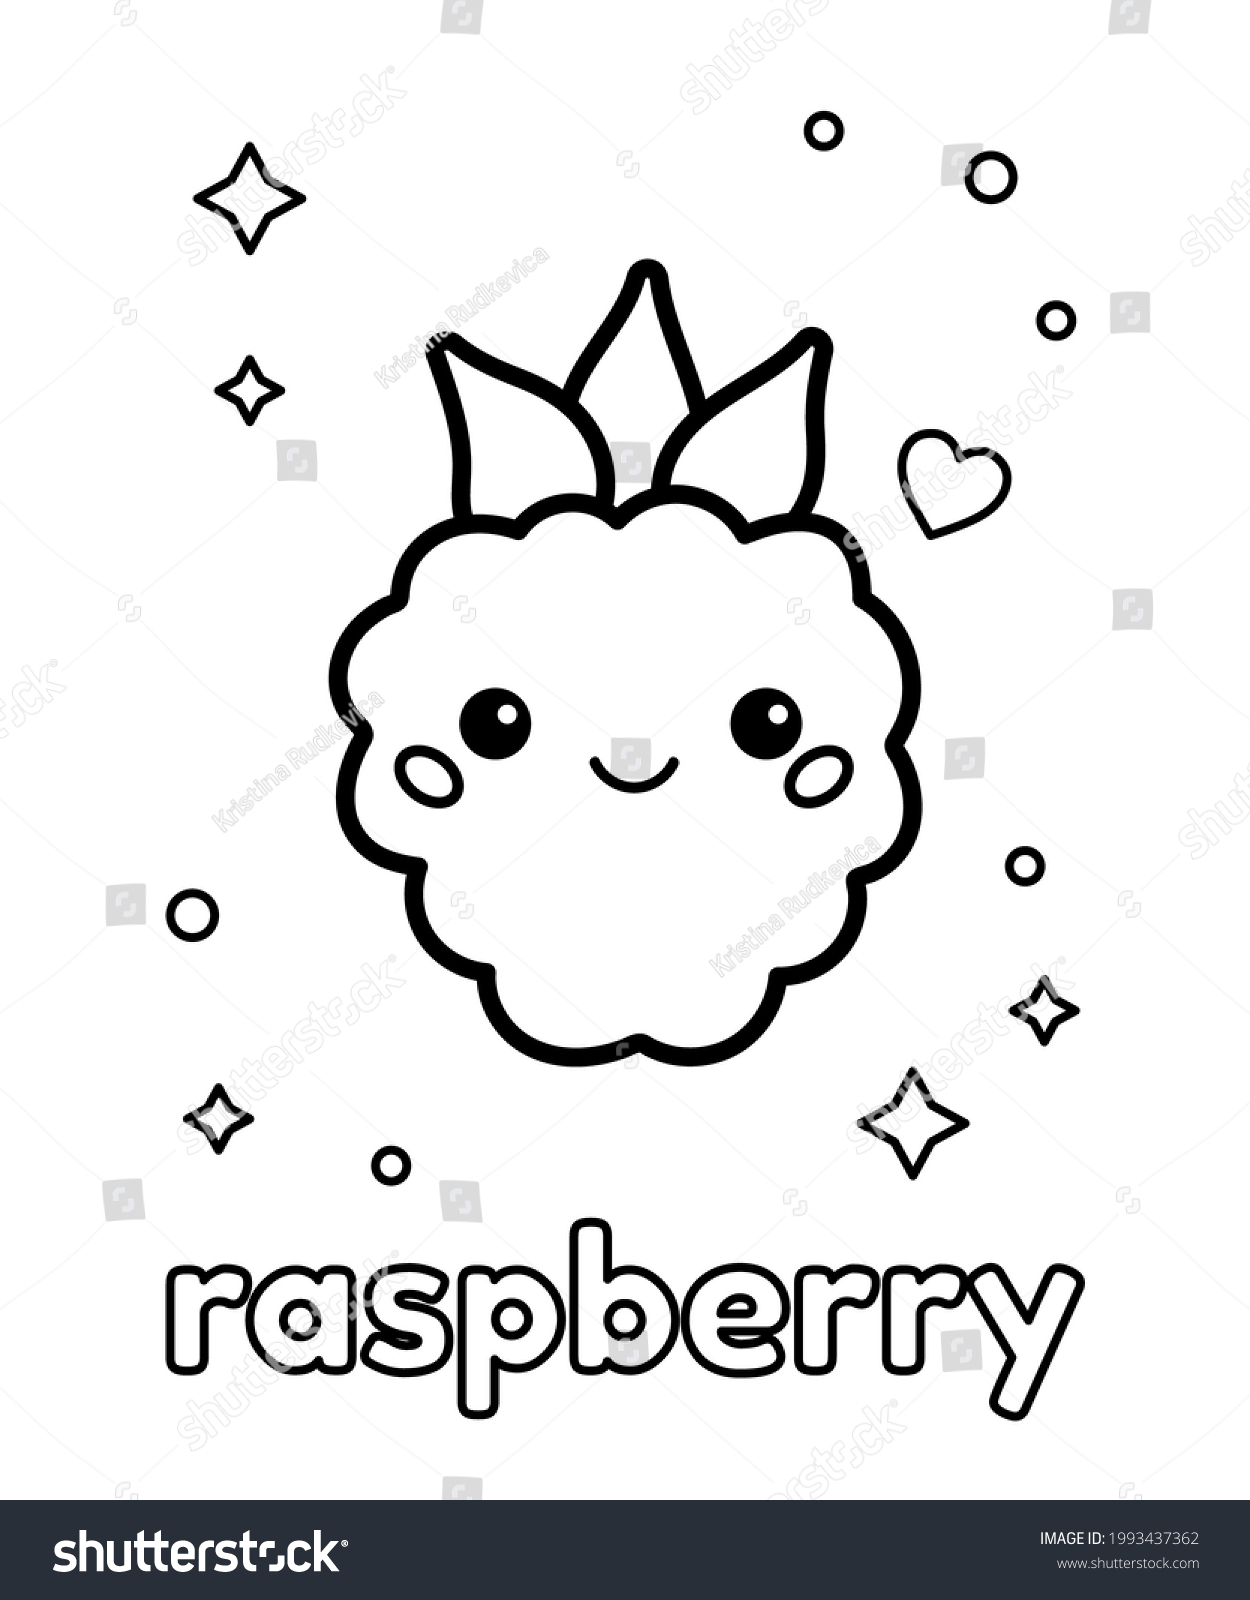 Cute cartoon kawaii raspberry face coloring stock vector royalty free